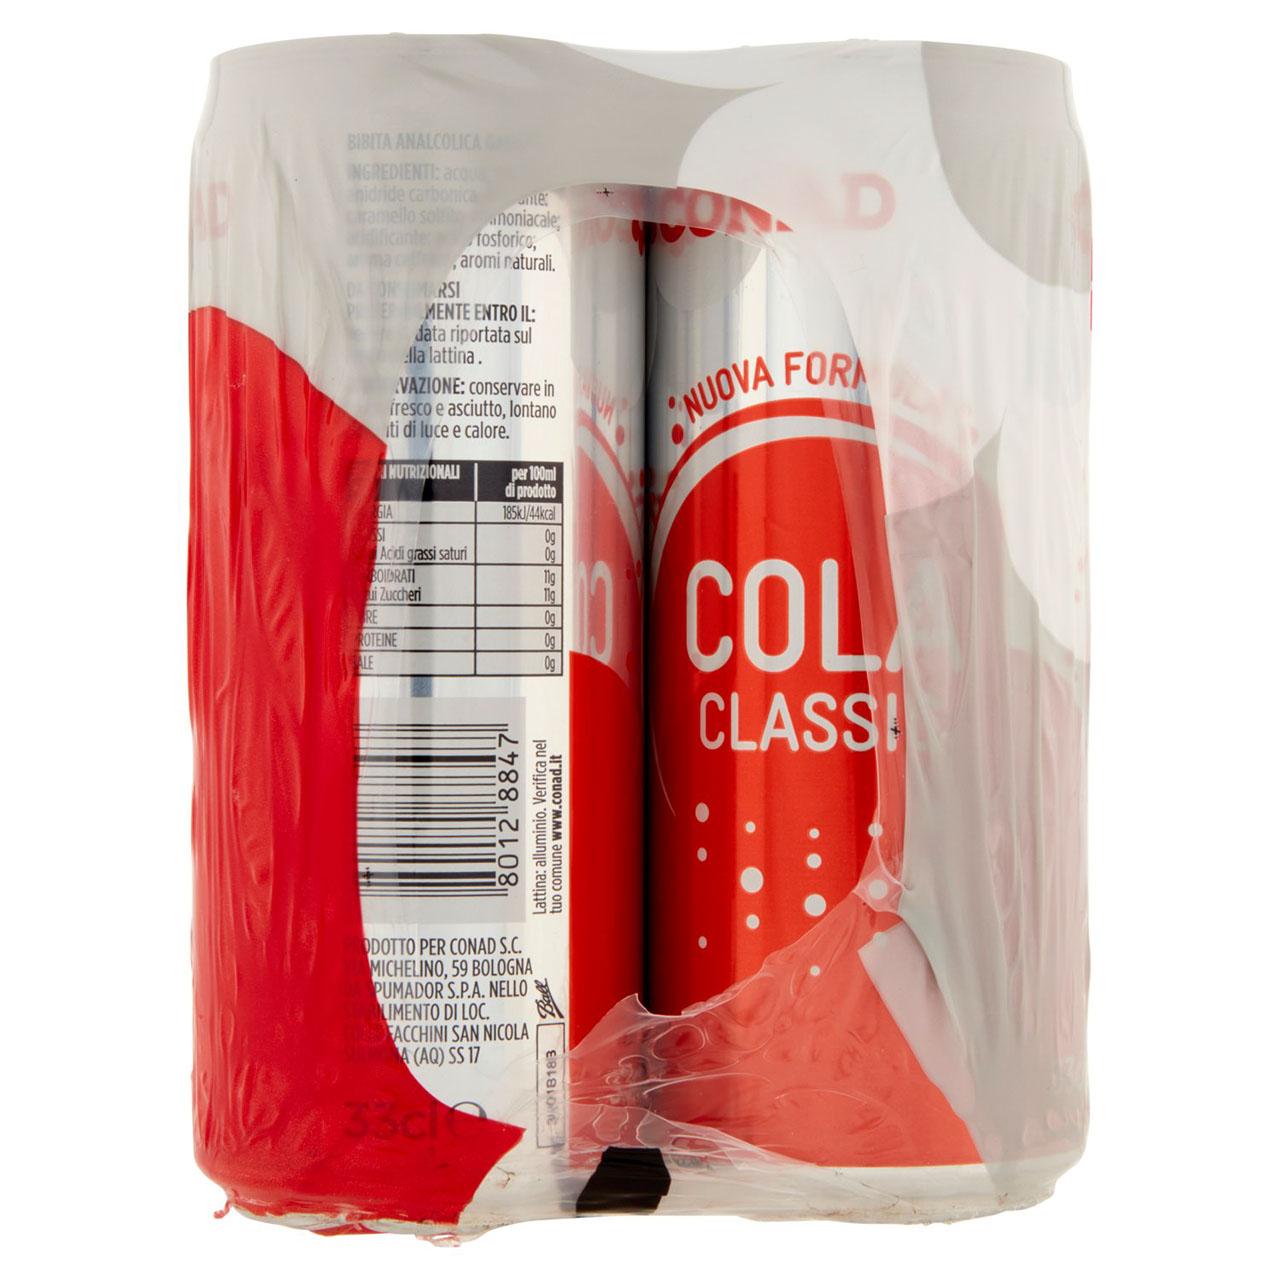 Cola Classic 6 x 33 cl Conad